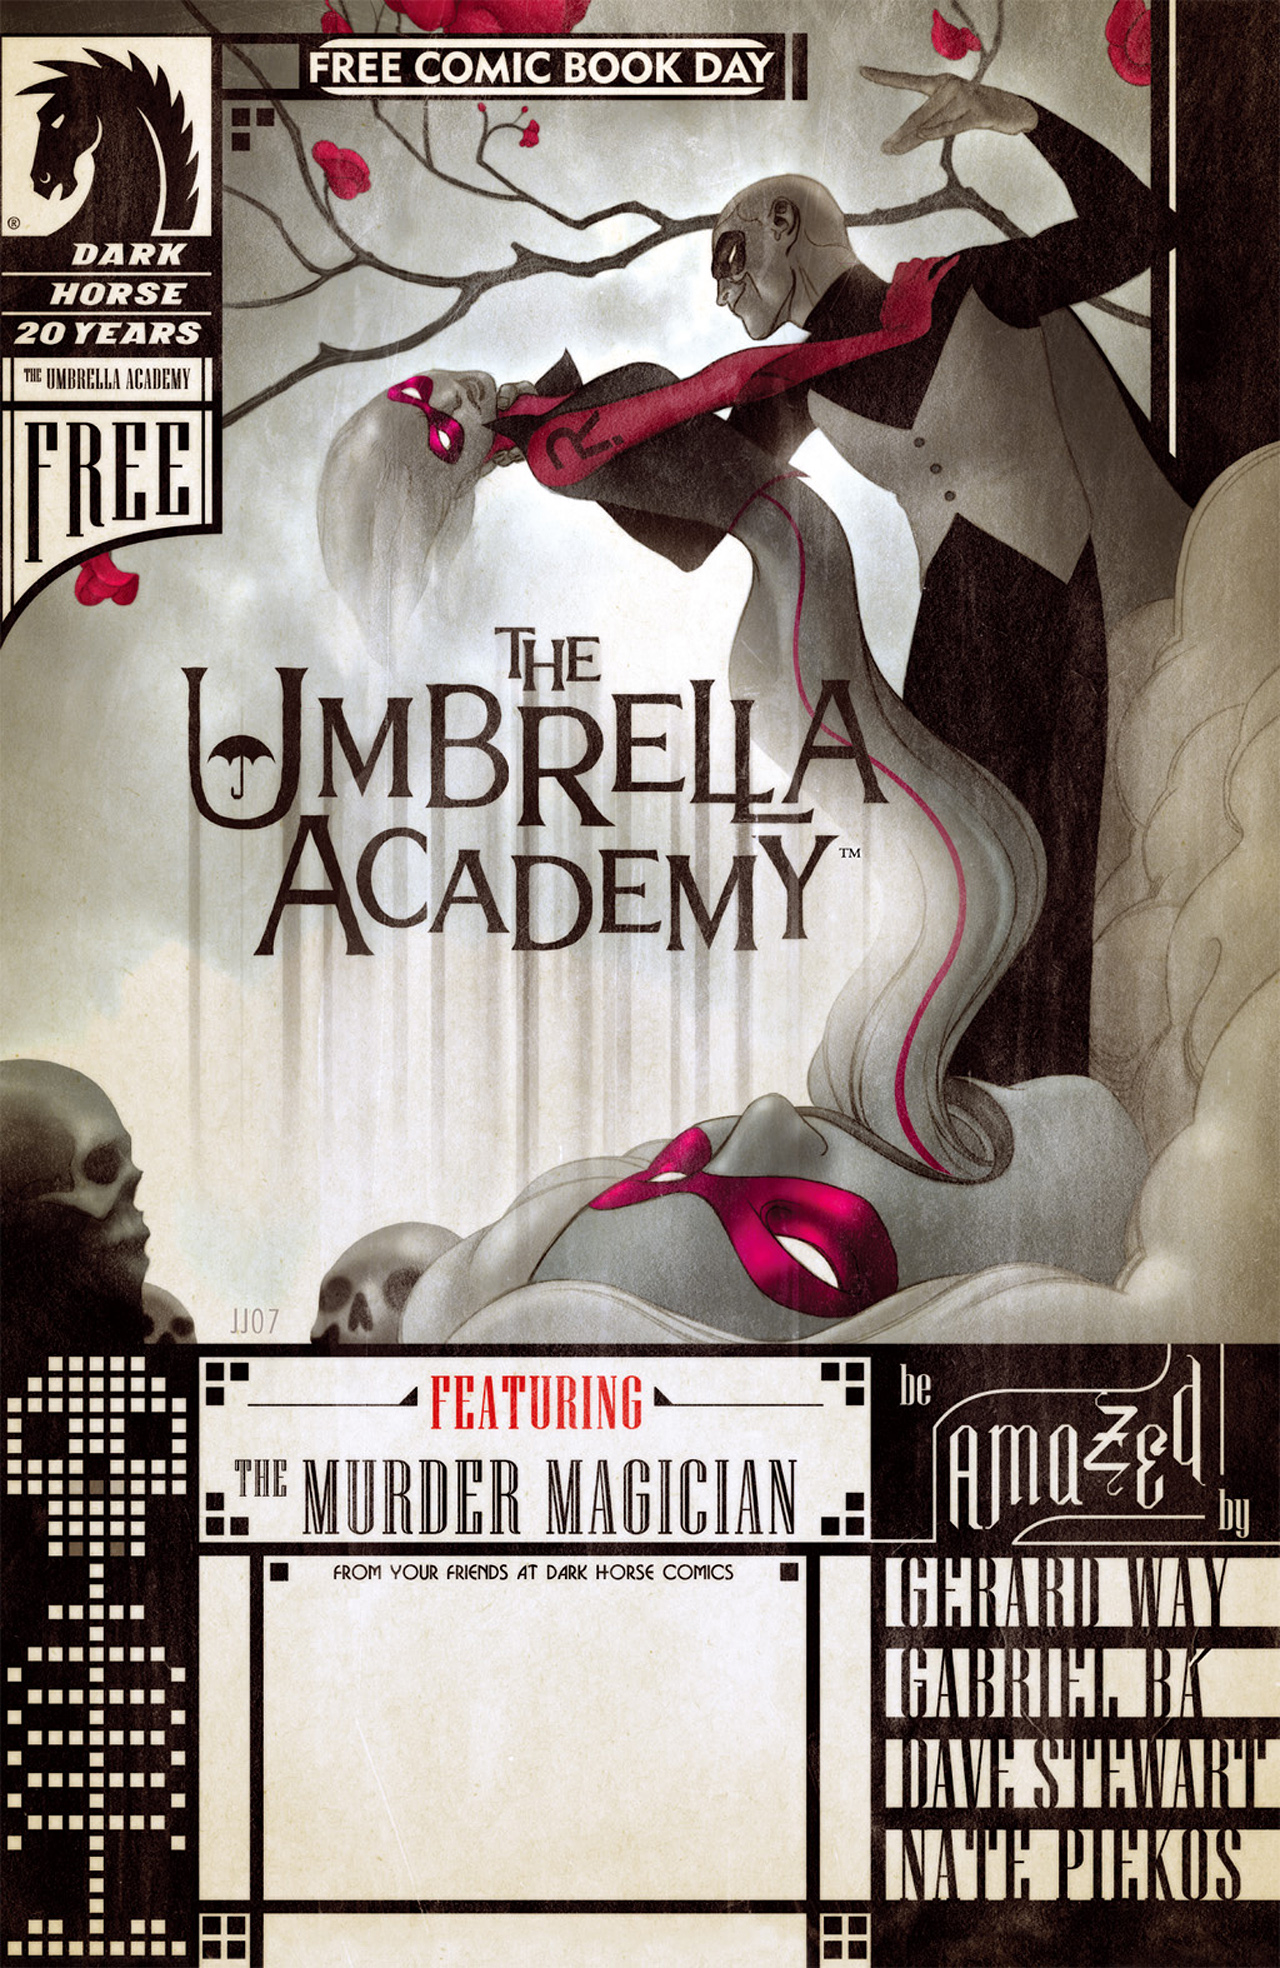 The Umbrella Academy - The Murder Magician